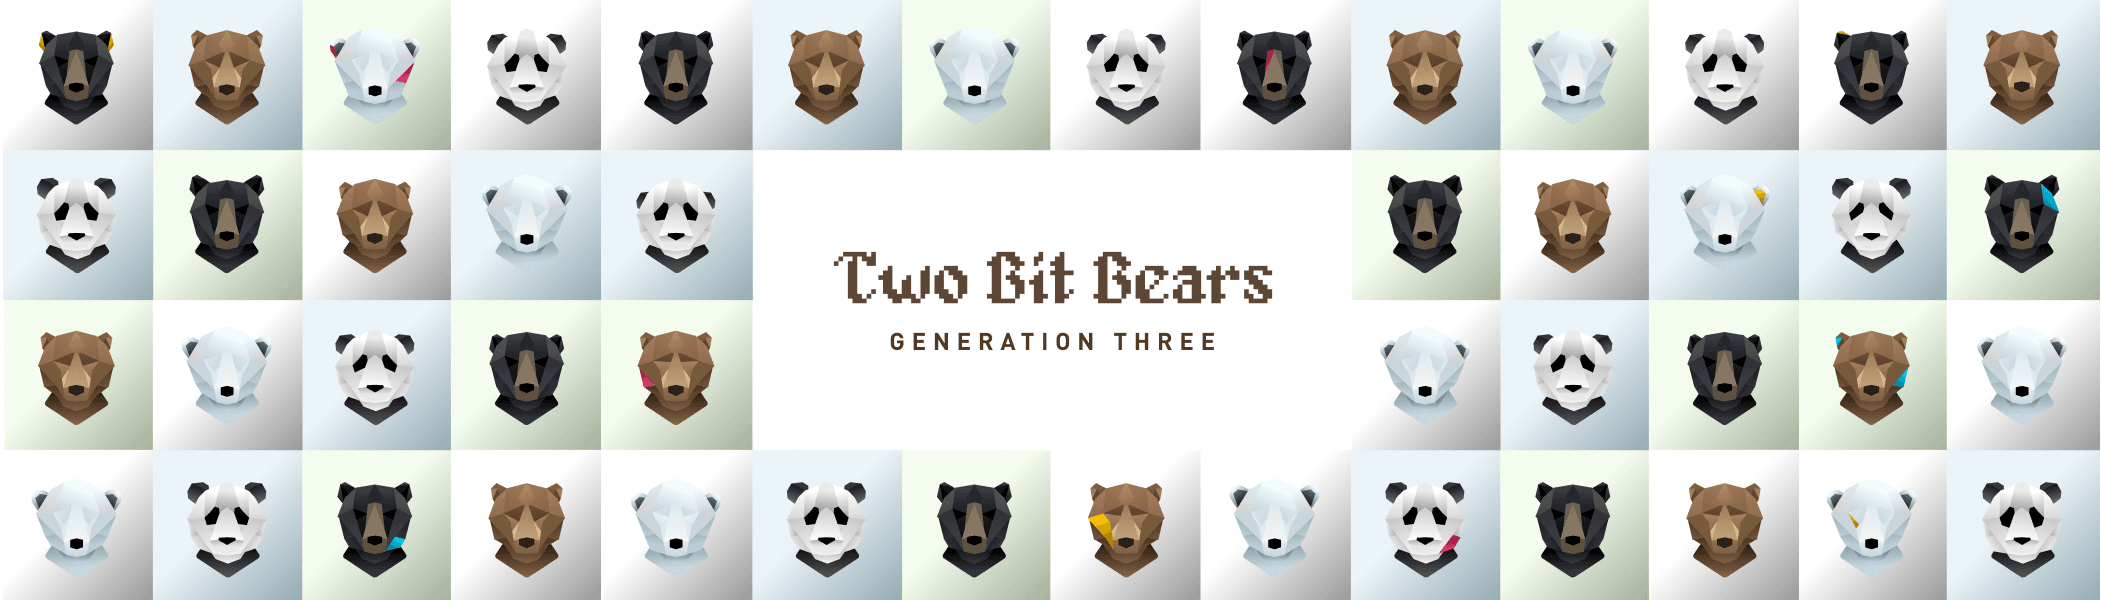 Two Bit Bears Generation Three